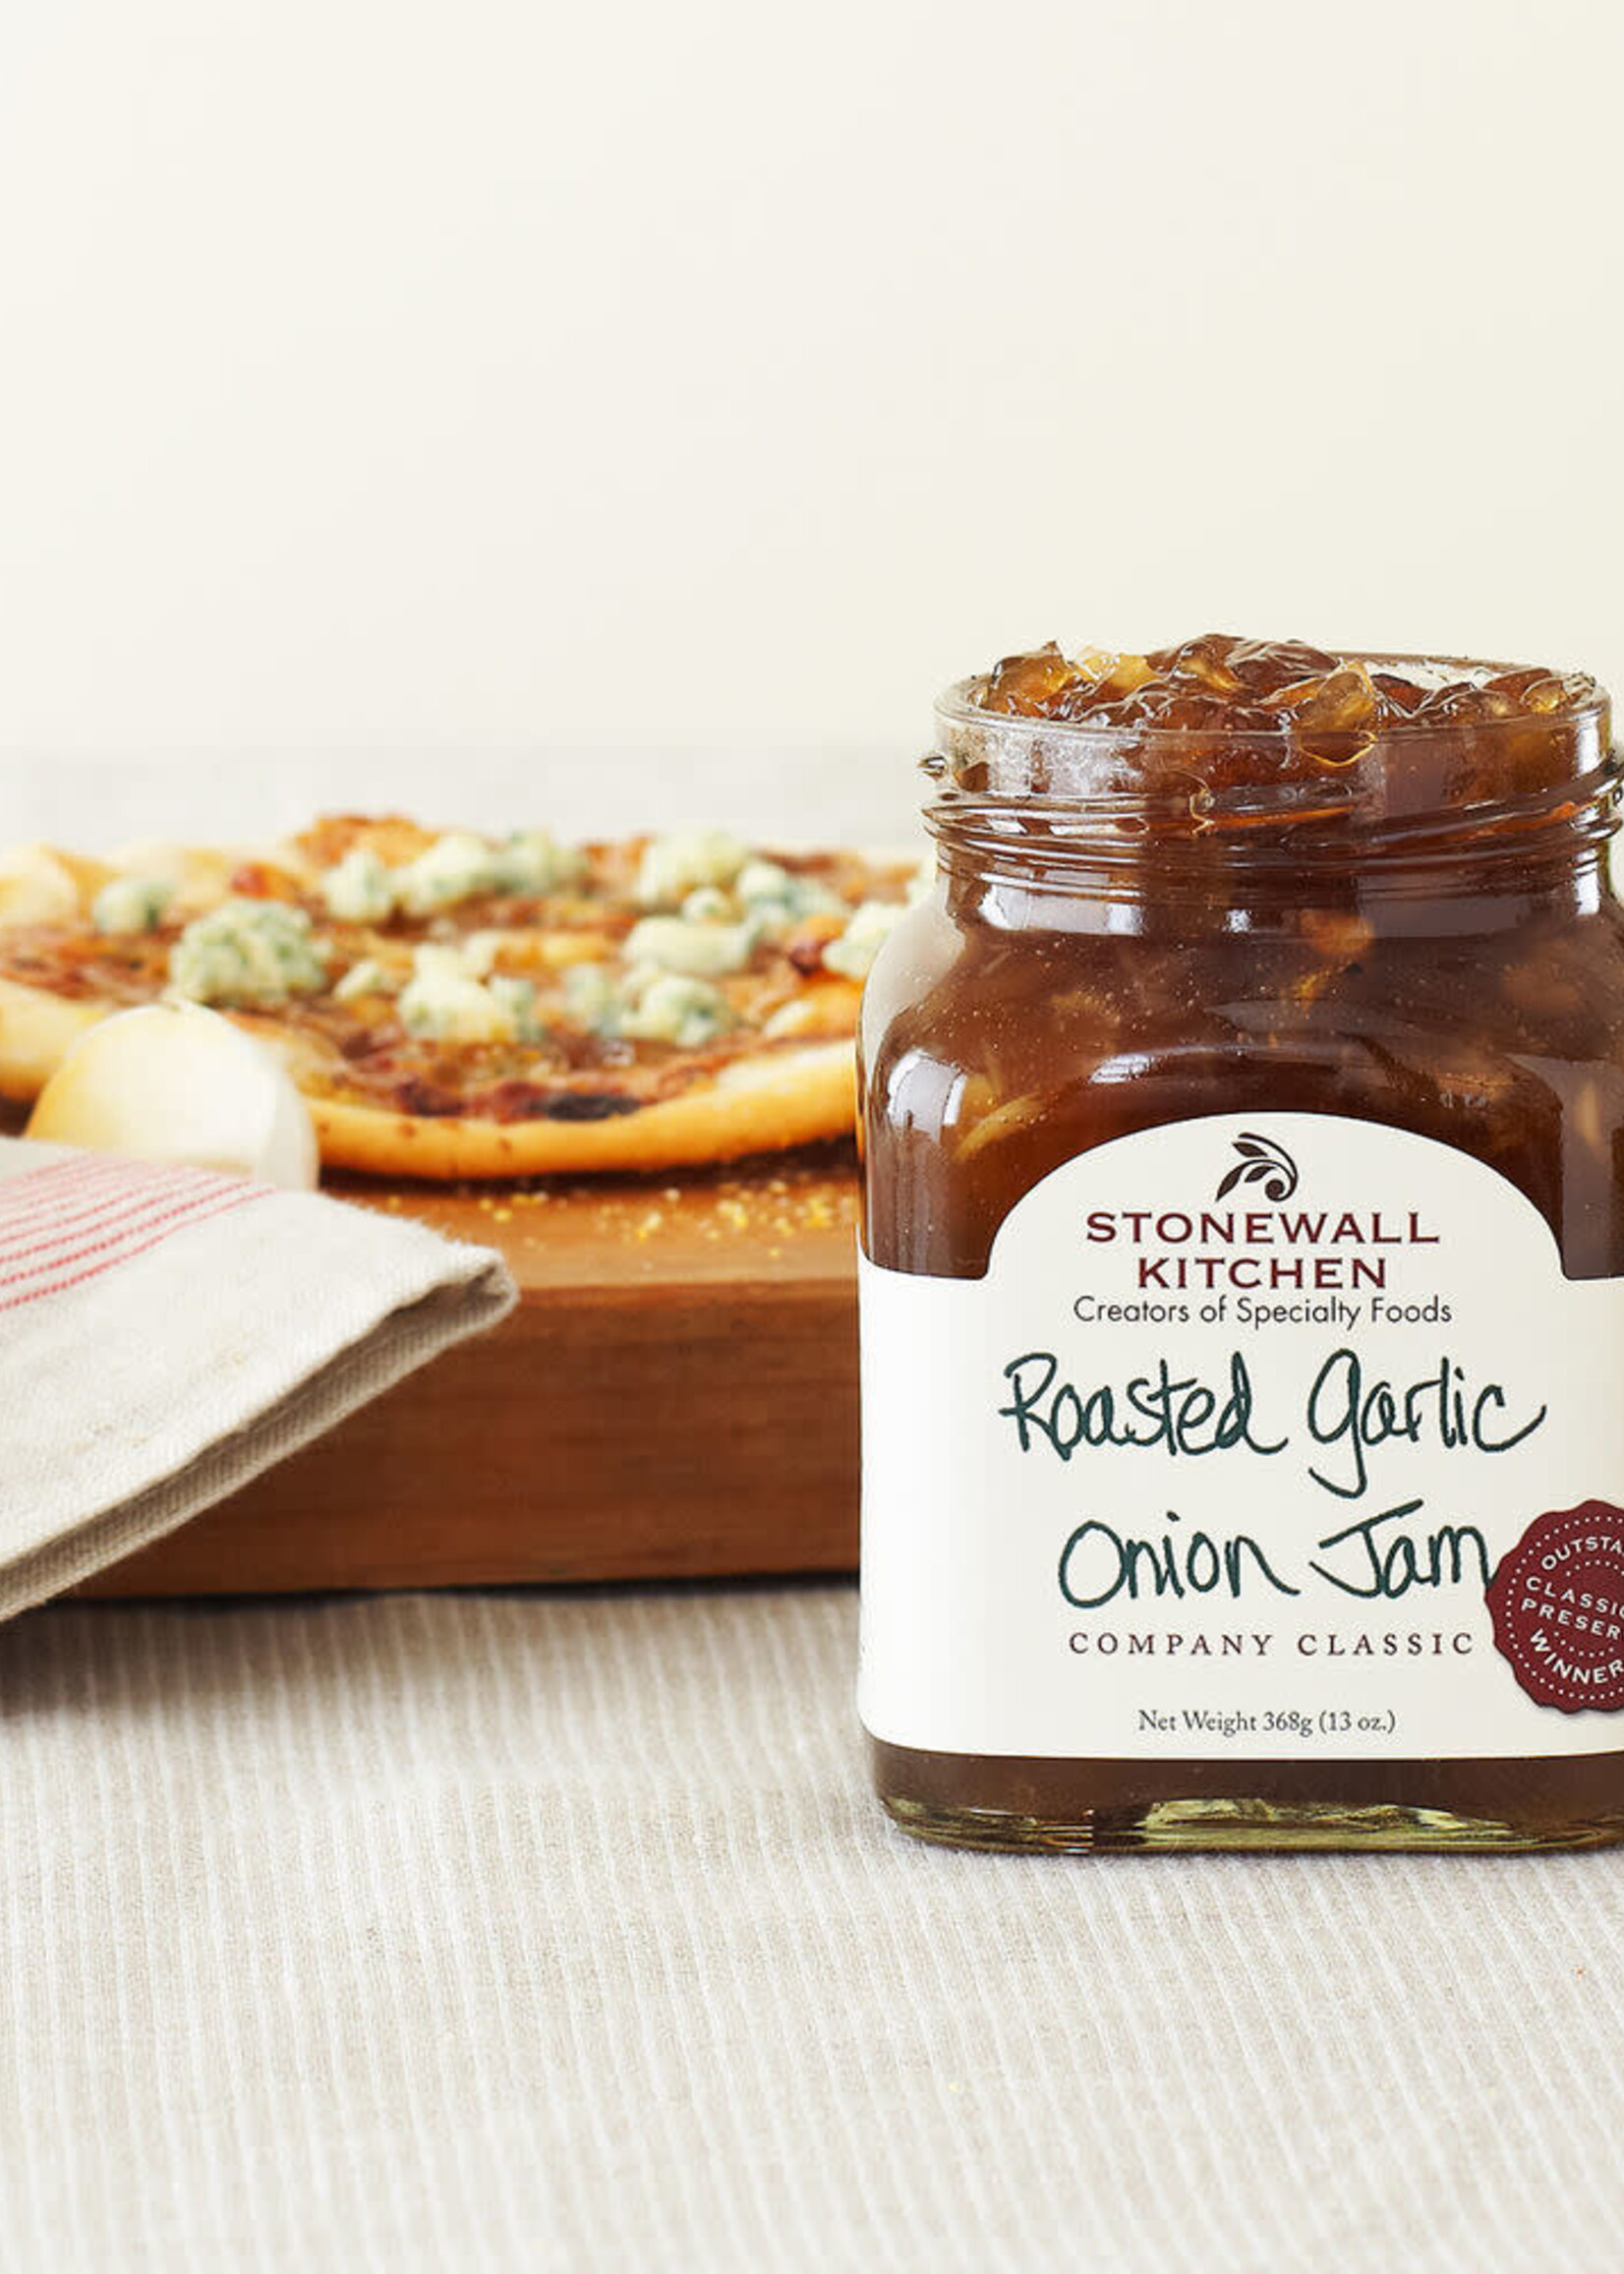 Stonewall Kitchens Roasted Garlic Onion Jam